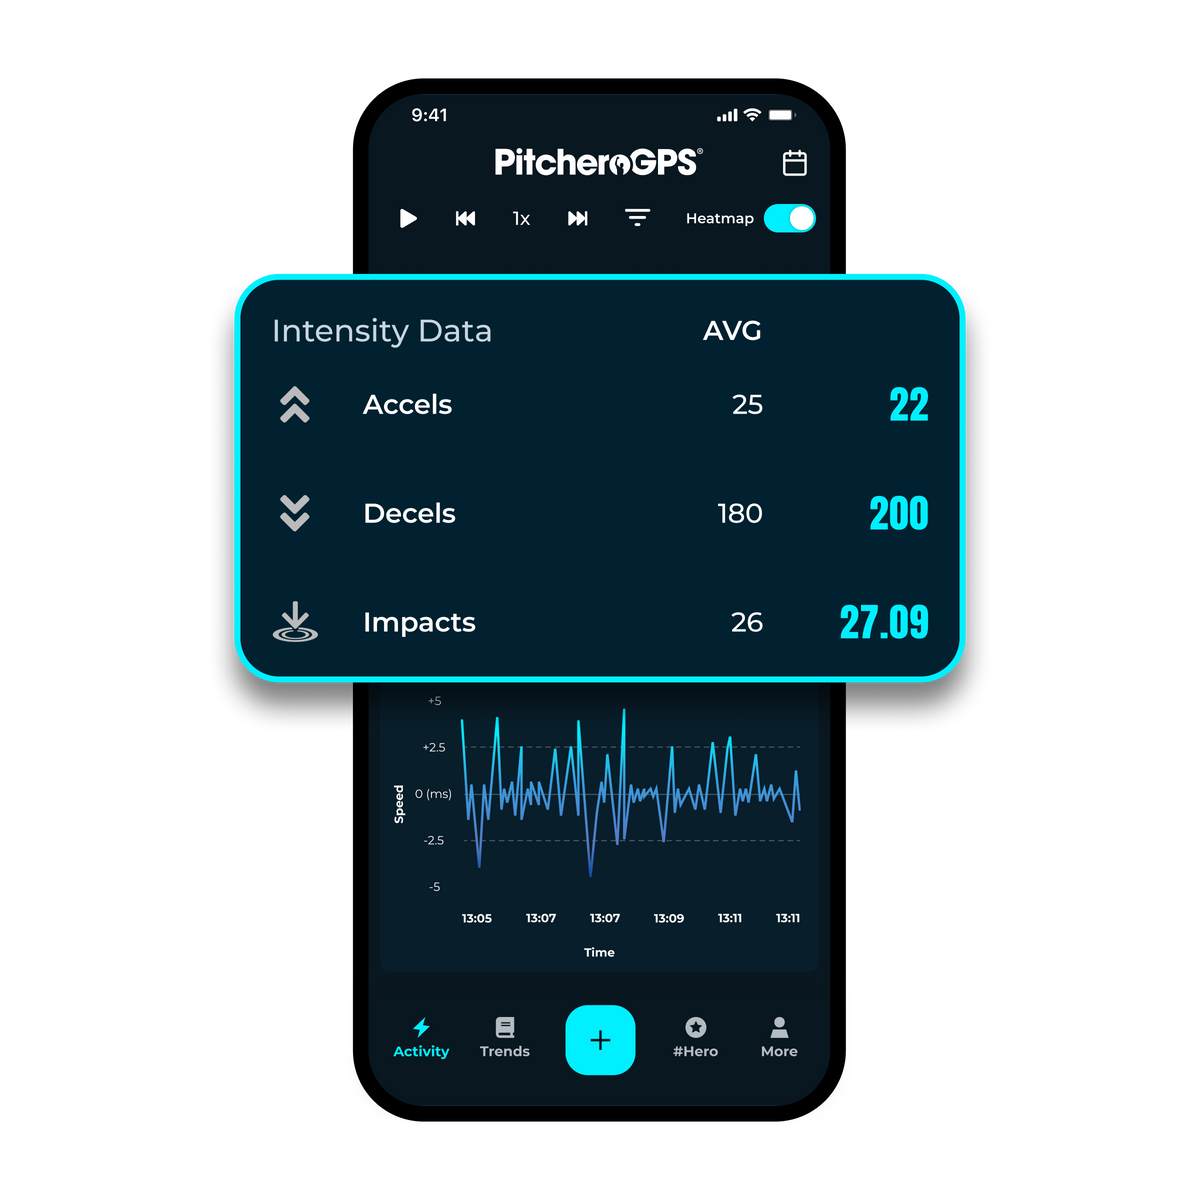 PitcheroGPS Player App showing Intensity data